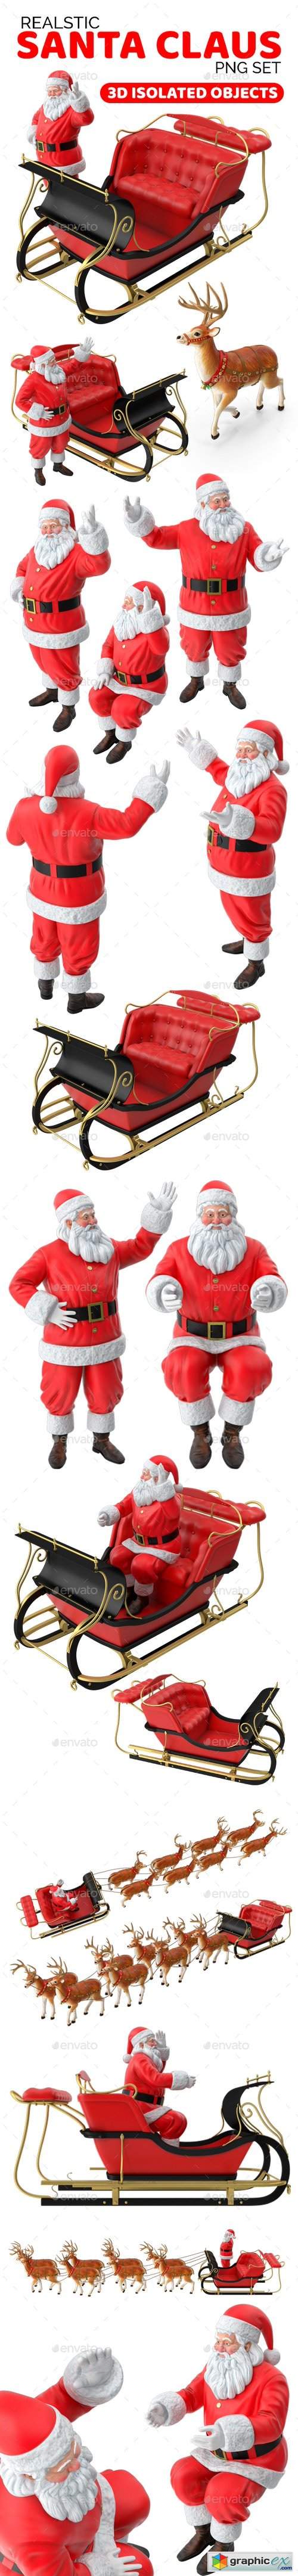 3D Realistic Santa Claus Pack